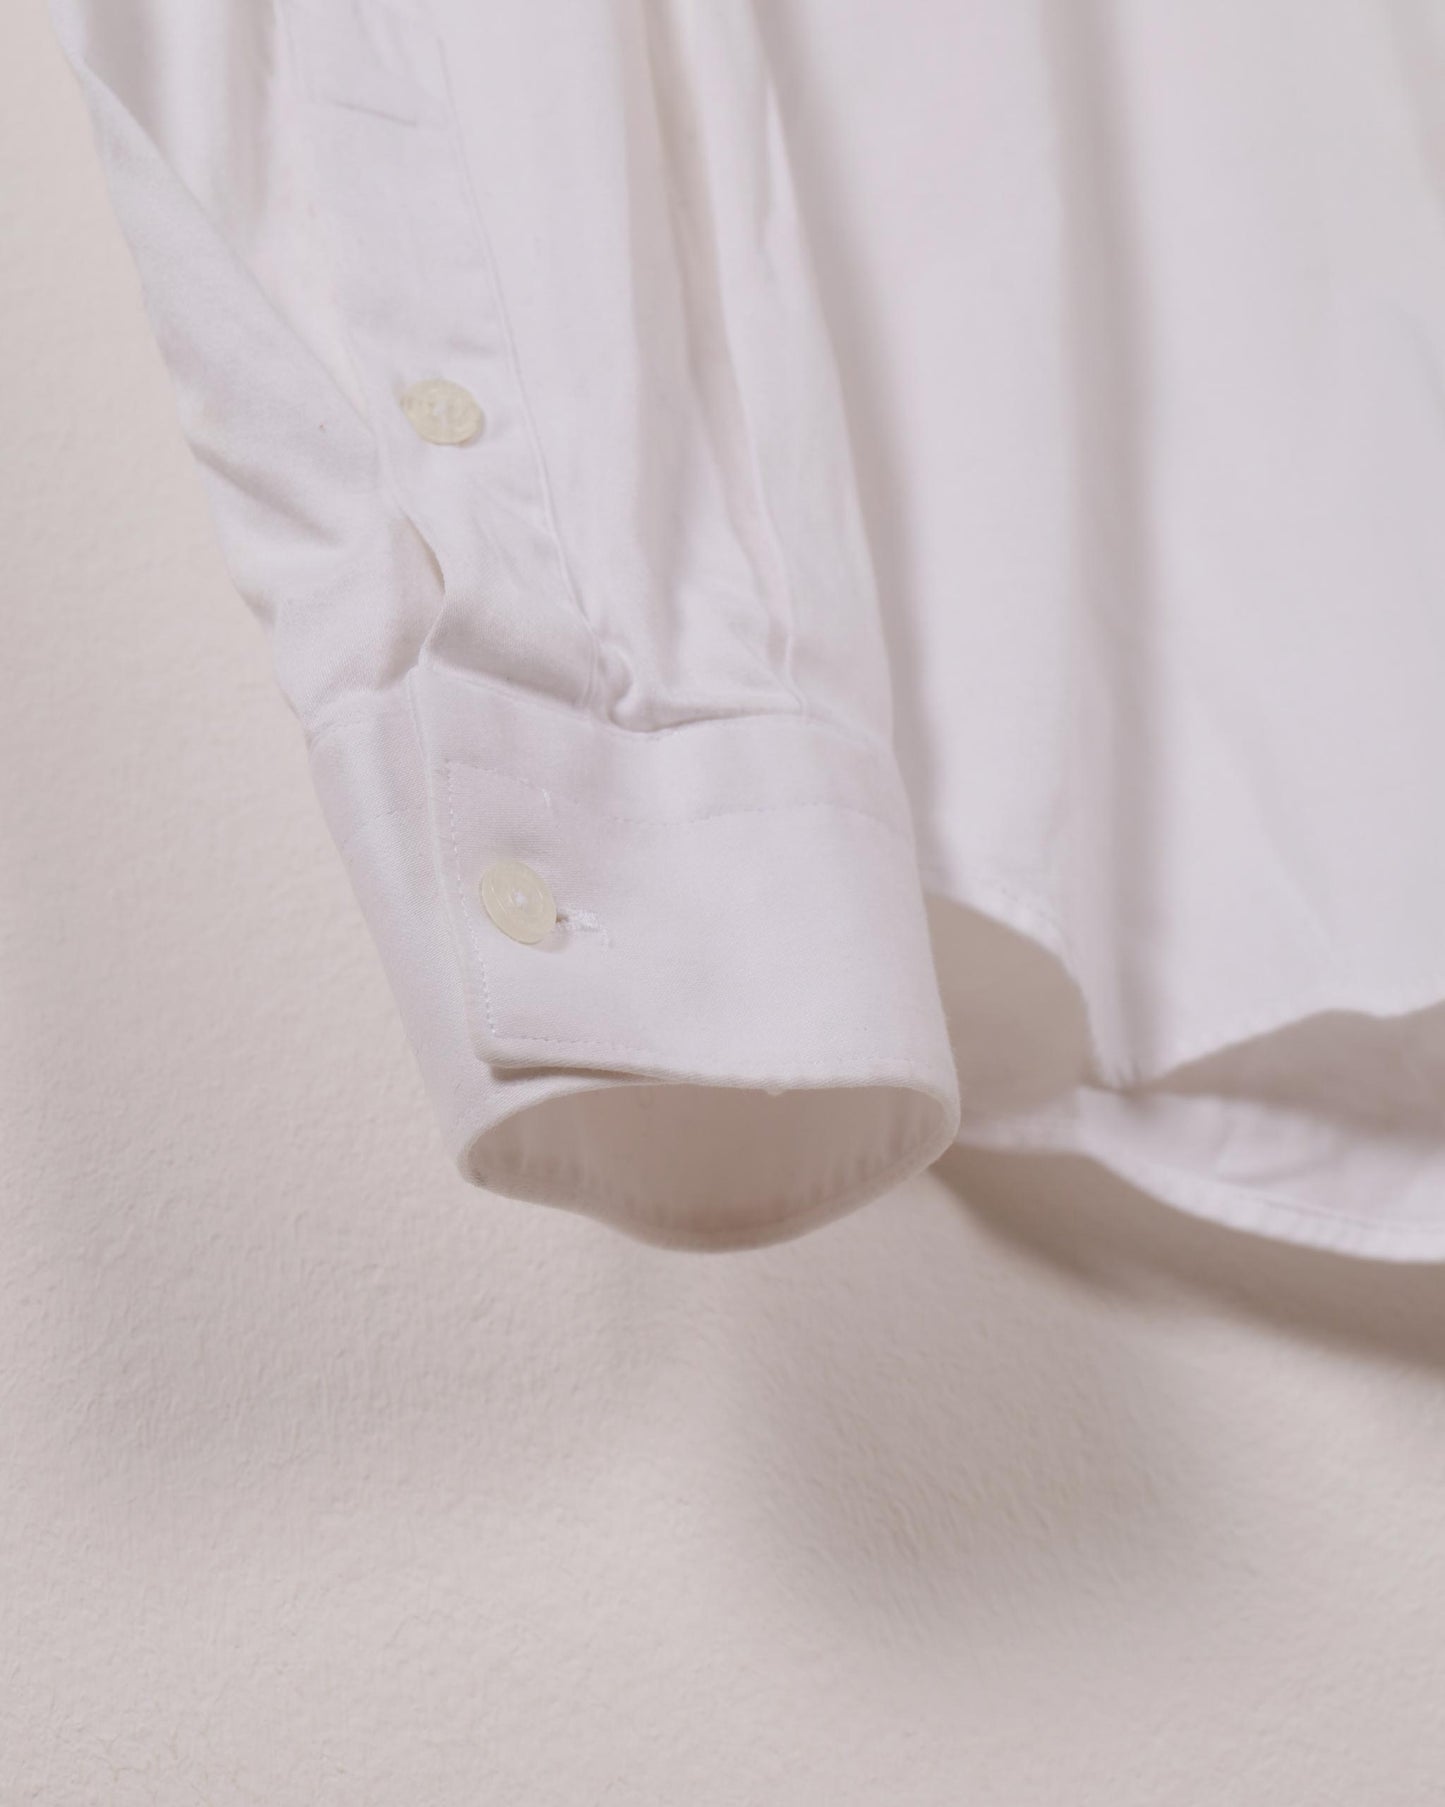 DSquared2 Slim Fit Long Sleeve Shirt White XL